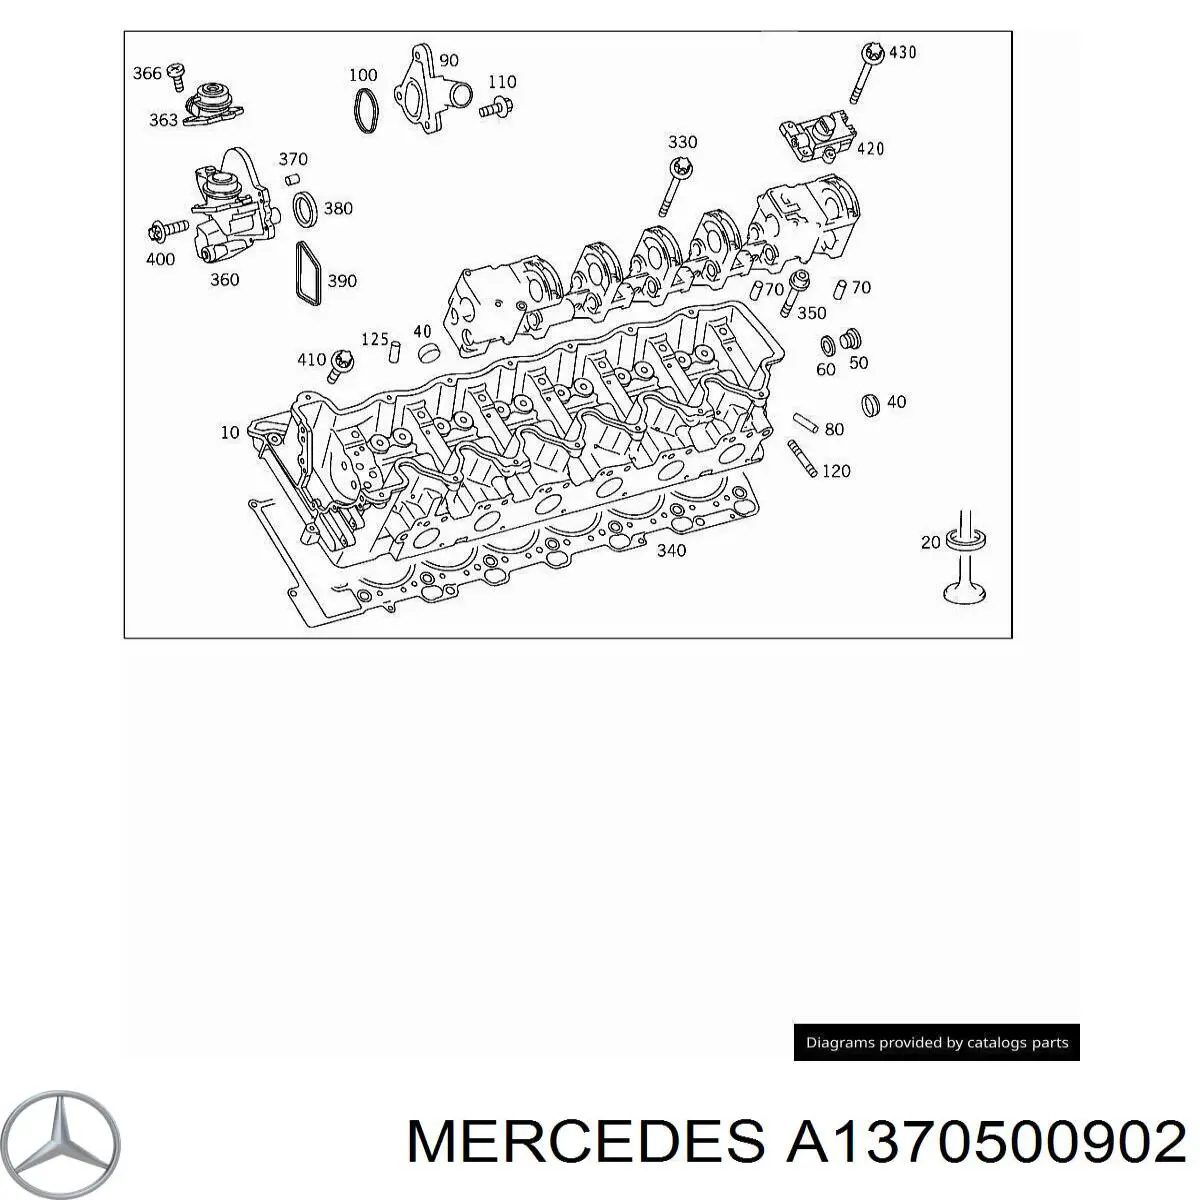 1370500902 Mercedes cama da árvore distribuidora